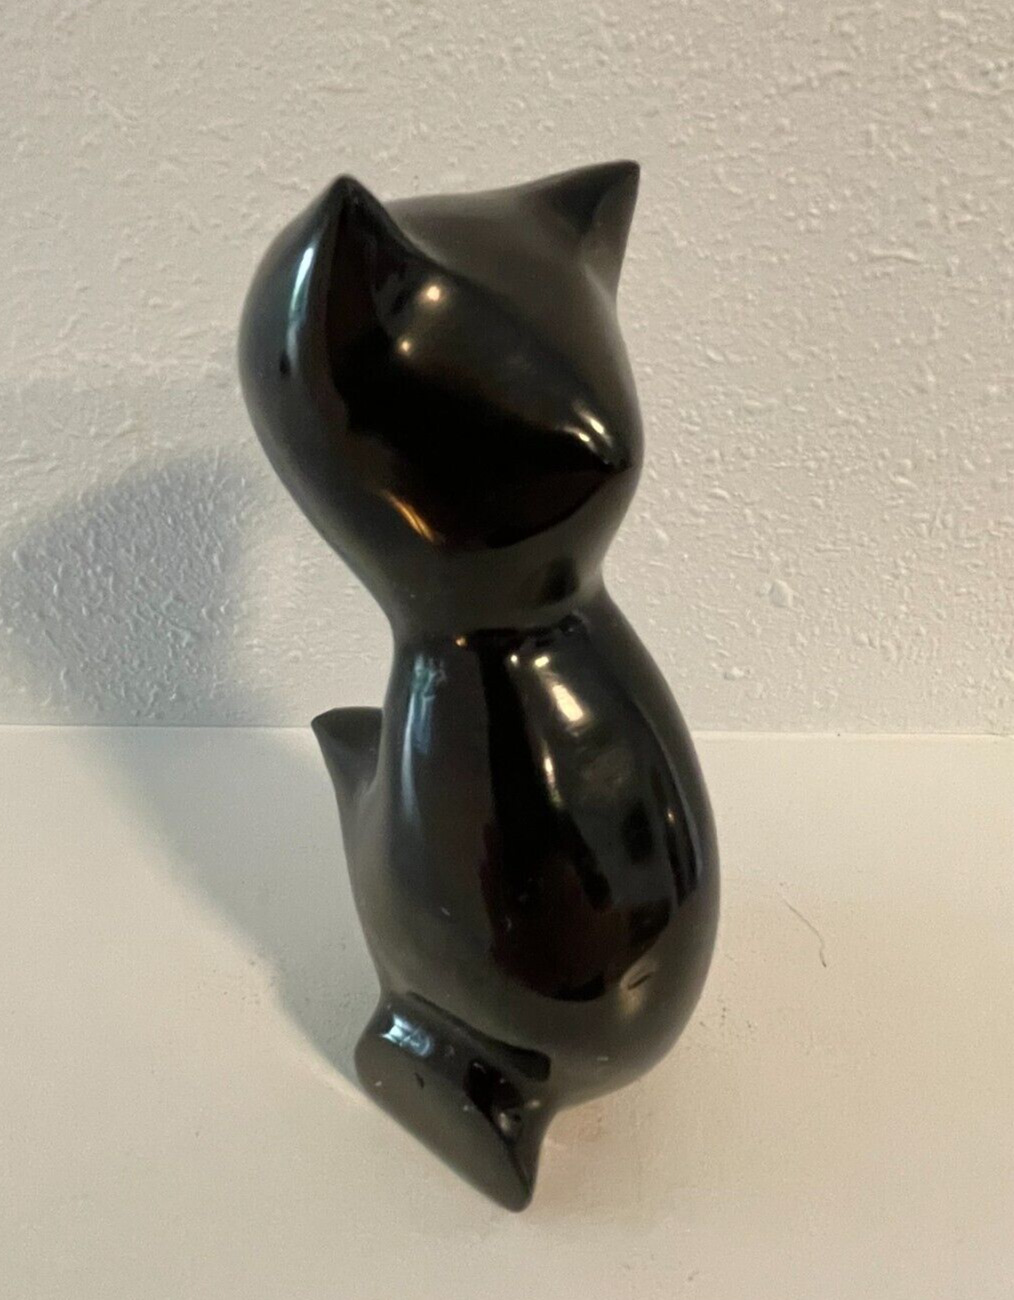 Unique Vintage Black Stone Modernist Kitty Cat Paperweight Figurine